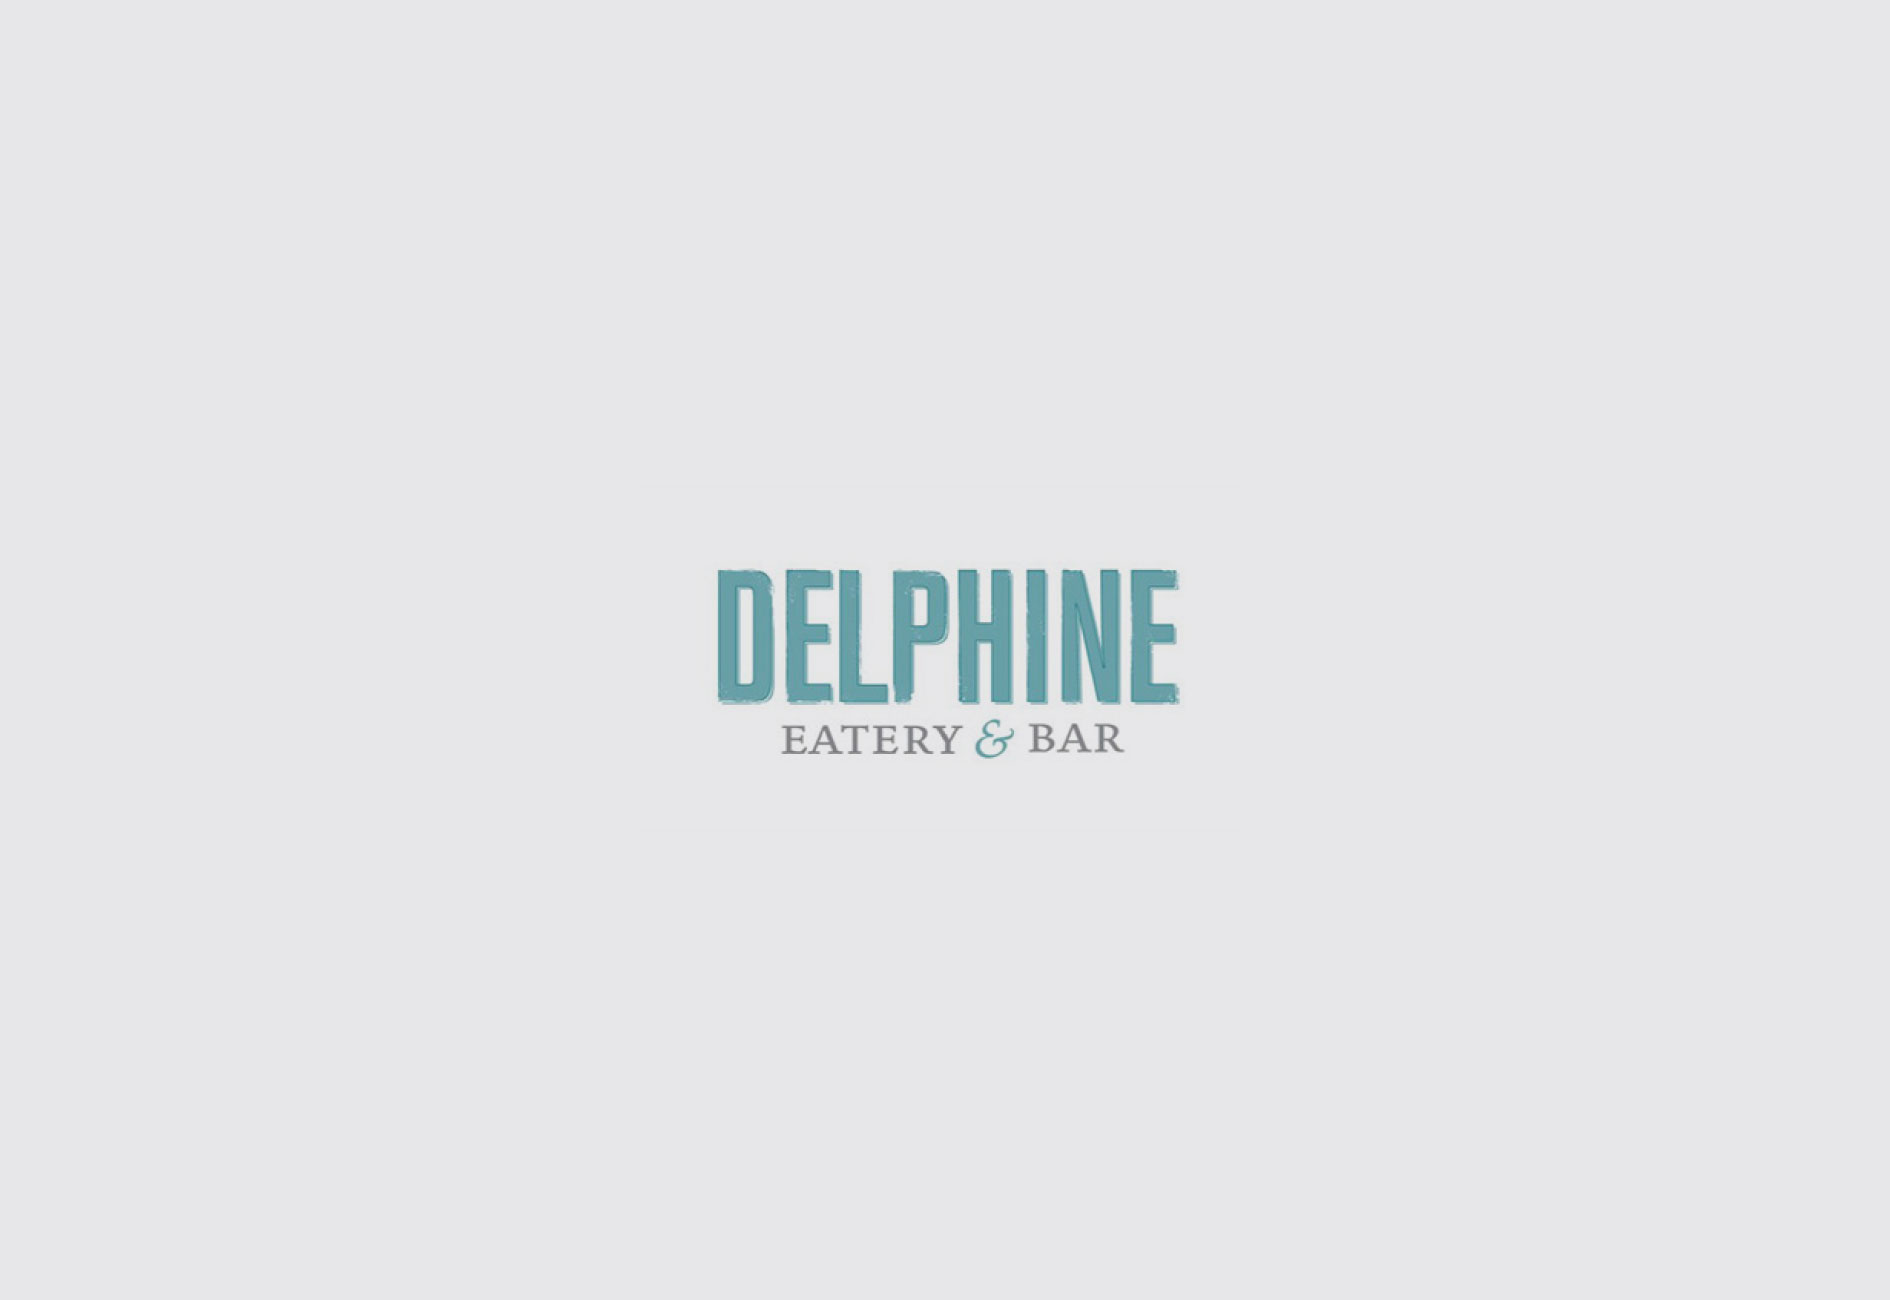 DELPHINE EATERY & BAR BRANDING by Mark Zeff Design